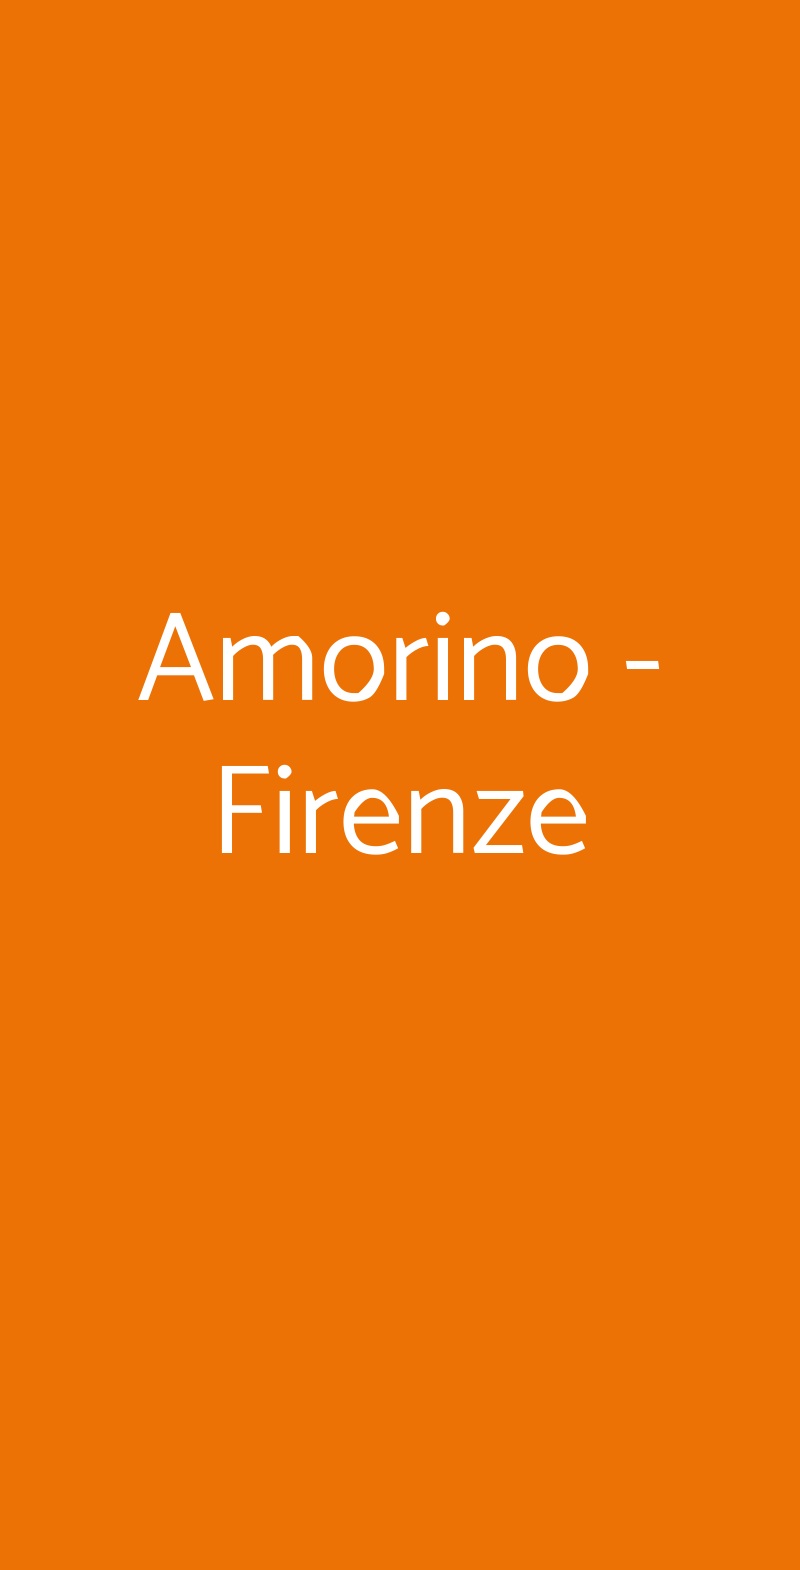 Amorino - Firenze Firenze menù 1 pagina